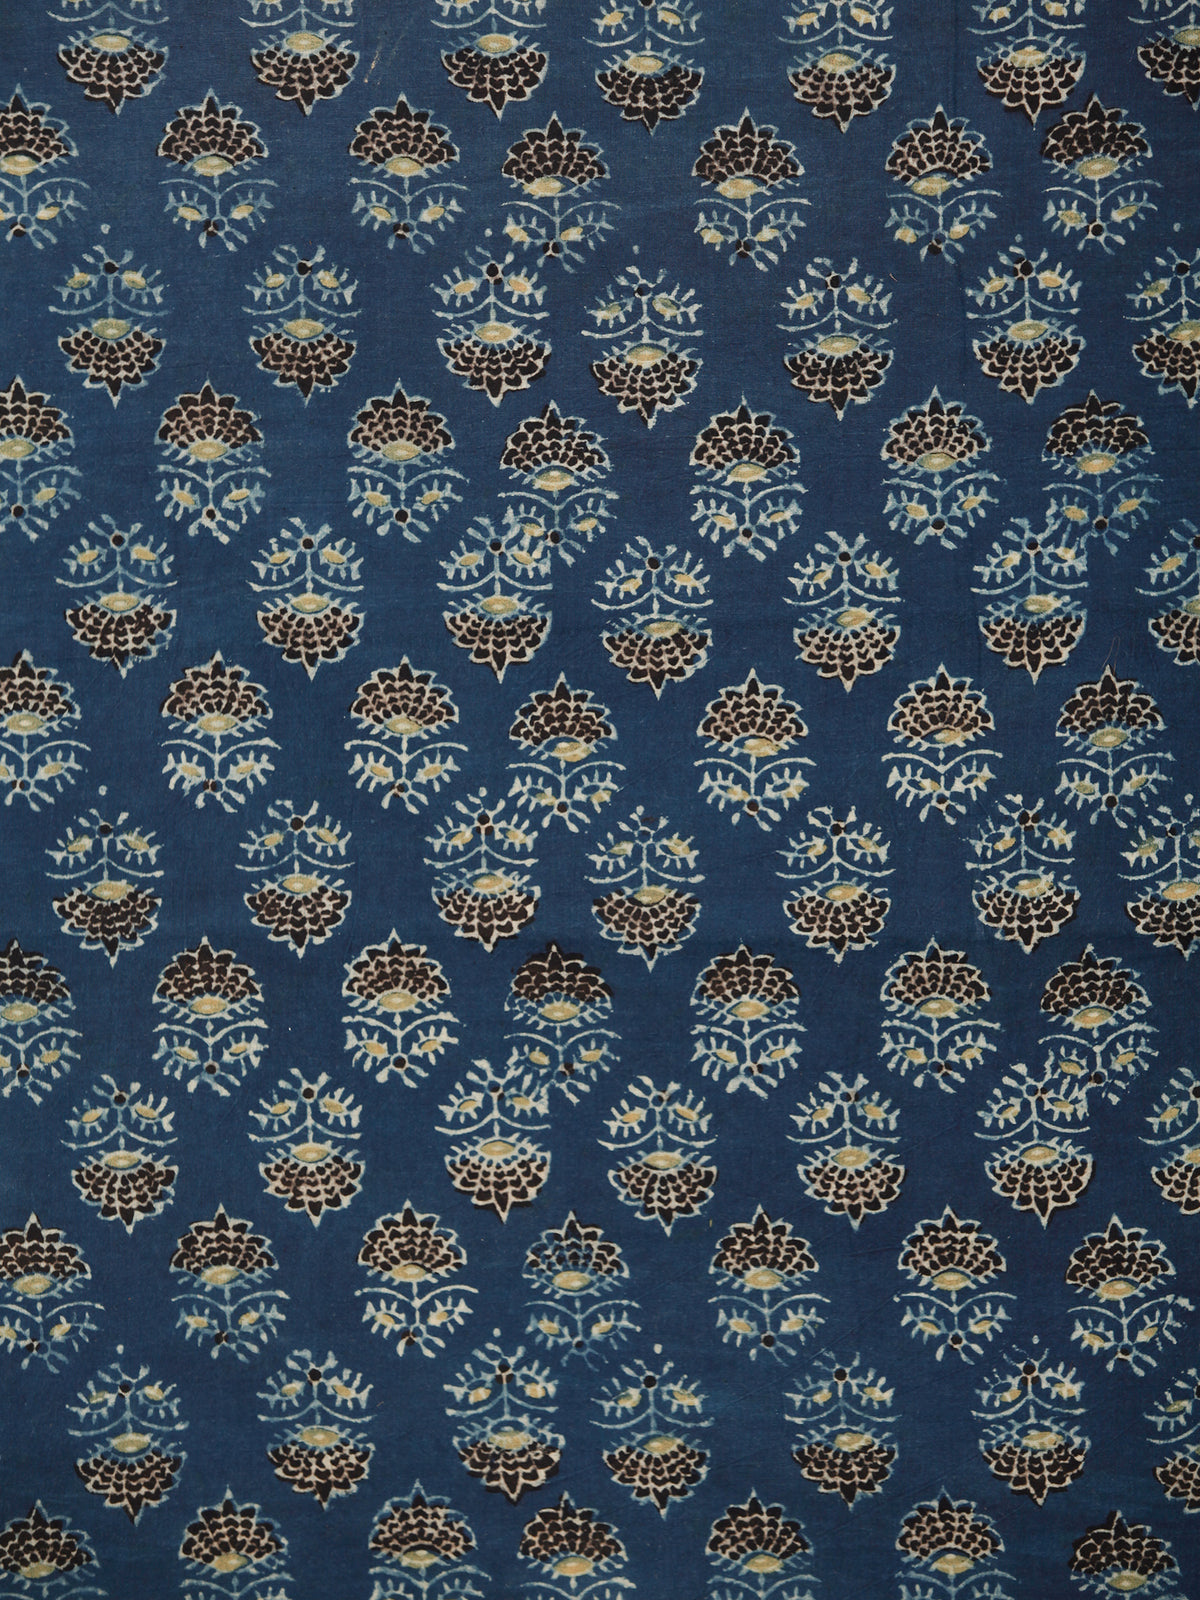 Indigo Black Lime Ajrakh Hand Block Printed Cotton Fabric Per Meter - F003F1782